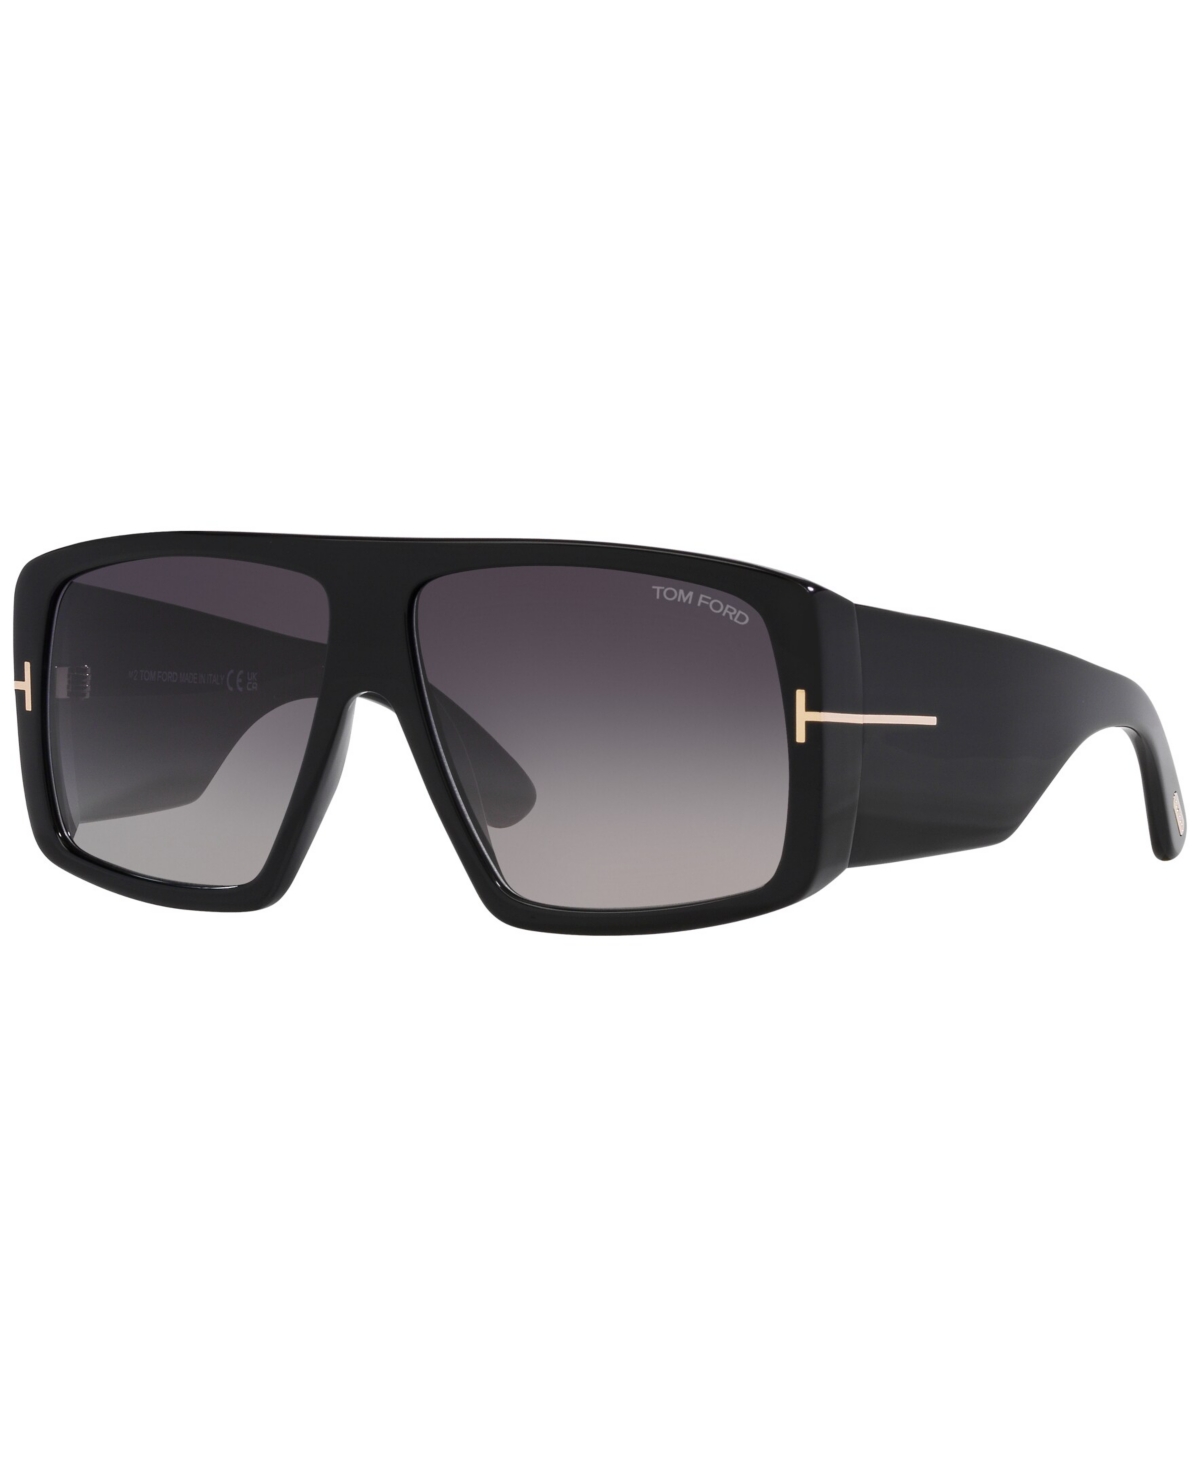 Tom Ford Unisex Sunglasses, Raven In Shiny Black